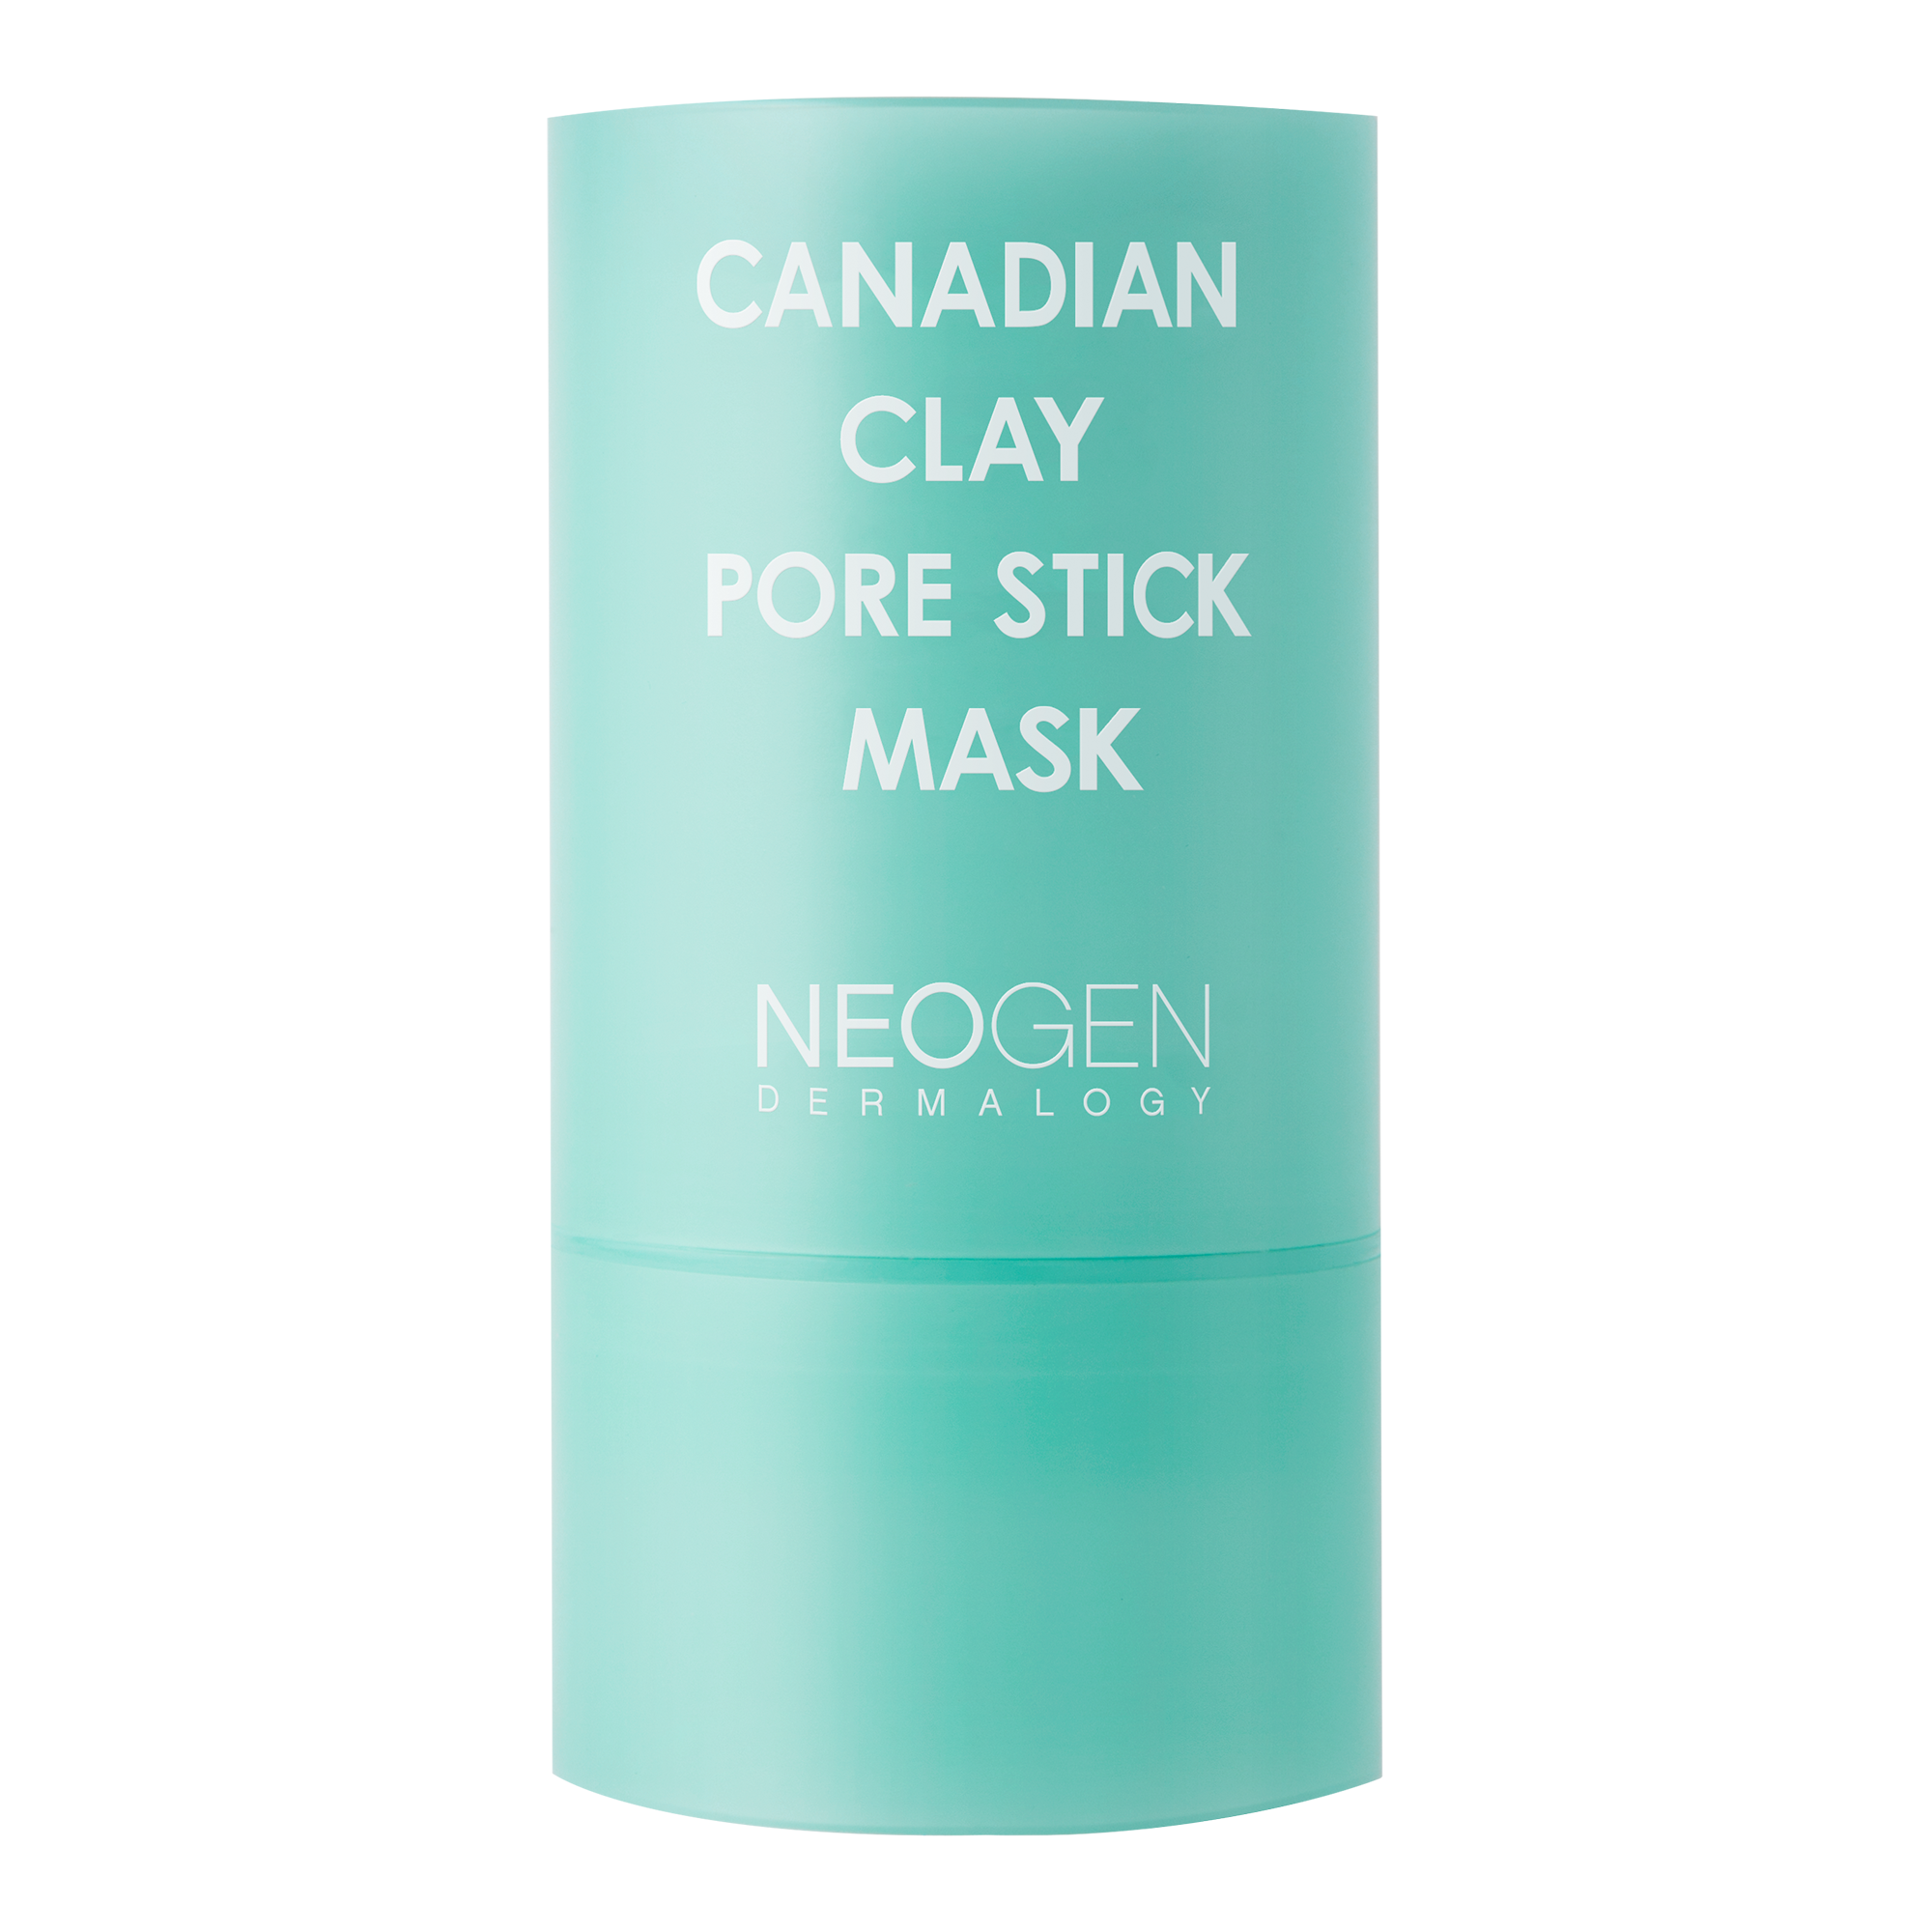 NEOGEN DERMALOGY Canadian Clay Pore Stick Mask (28g) - NEOGEN GLOBAL